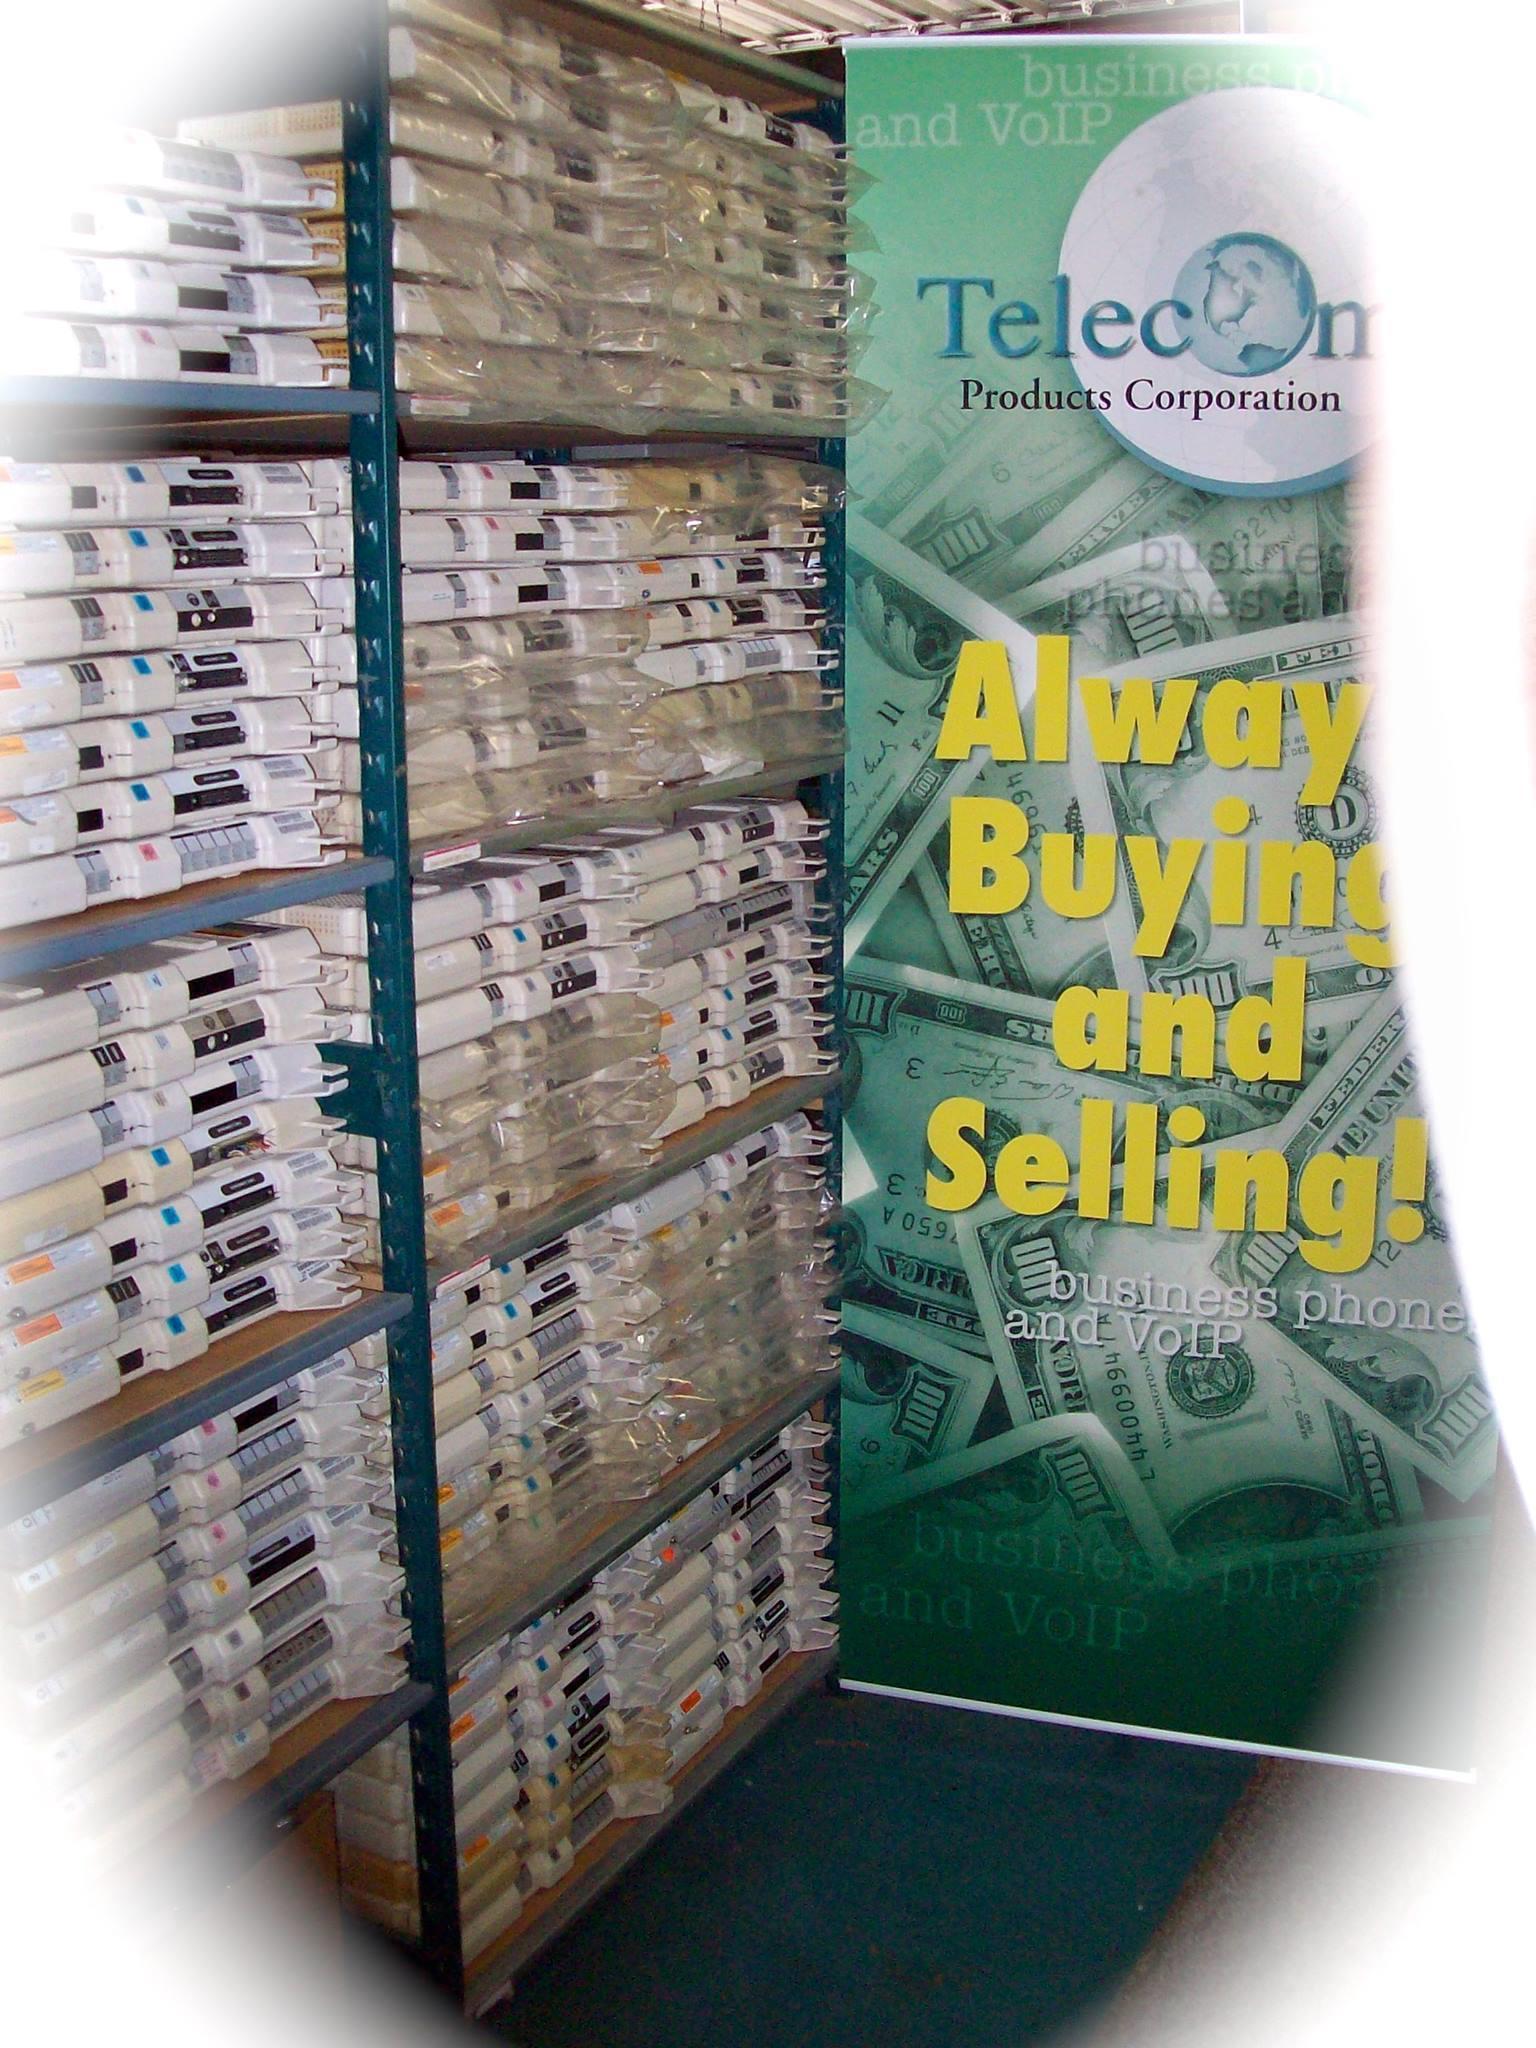 Telecom Products Corporation Photo